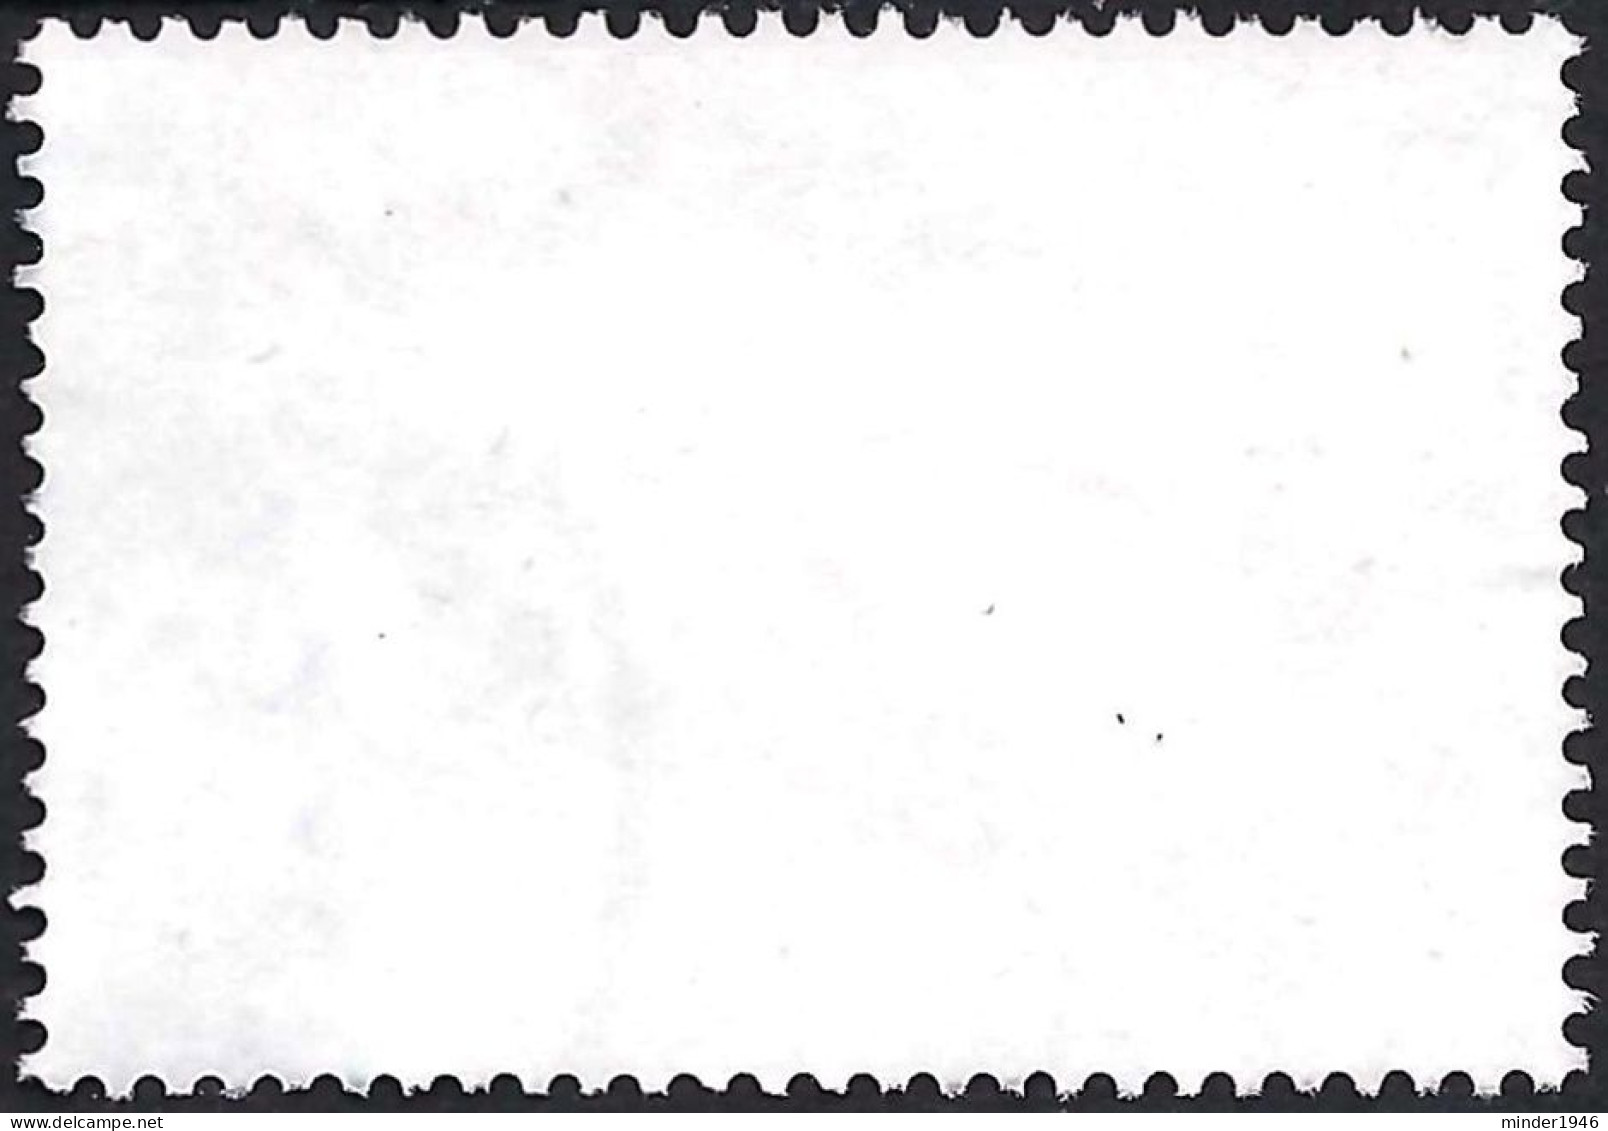 AUSTRALIAN ANTARCTIC TERRITORY (AAT) 2006 QEII $1 Multicoloured, Fish Of Antarctica-Eaton's Skate SG174 FU - Used Stamps